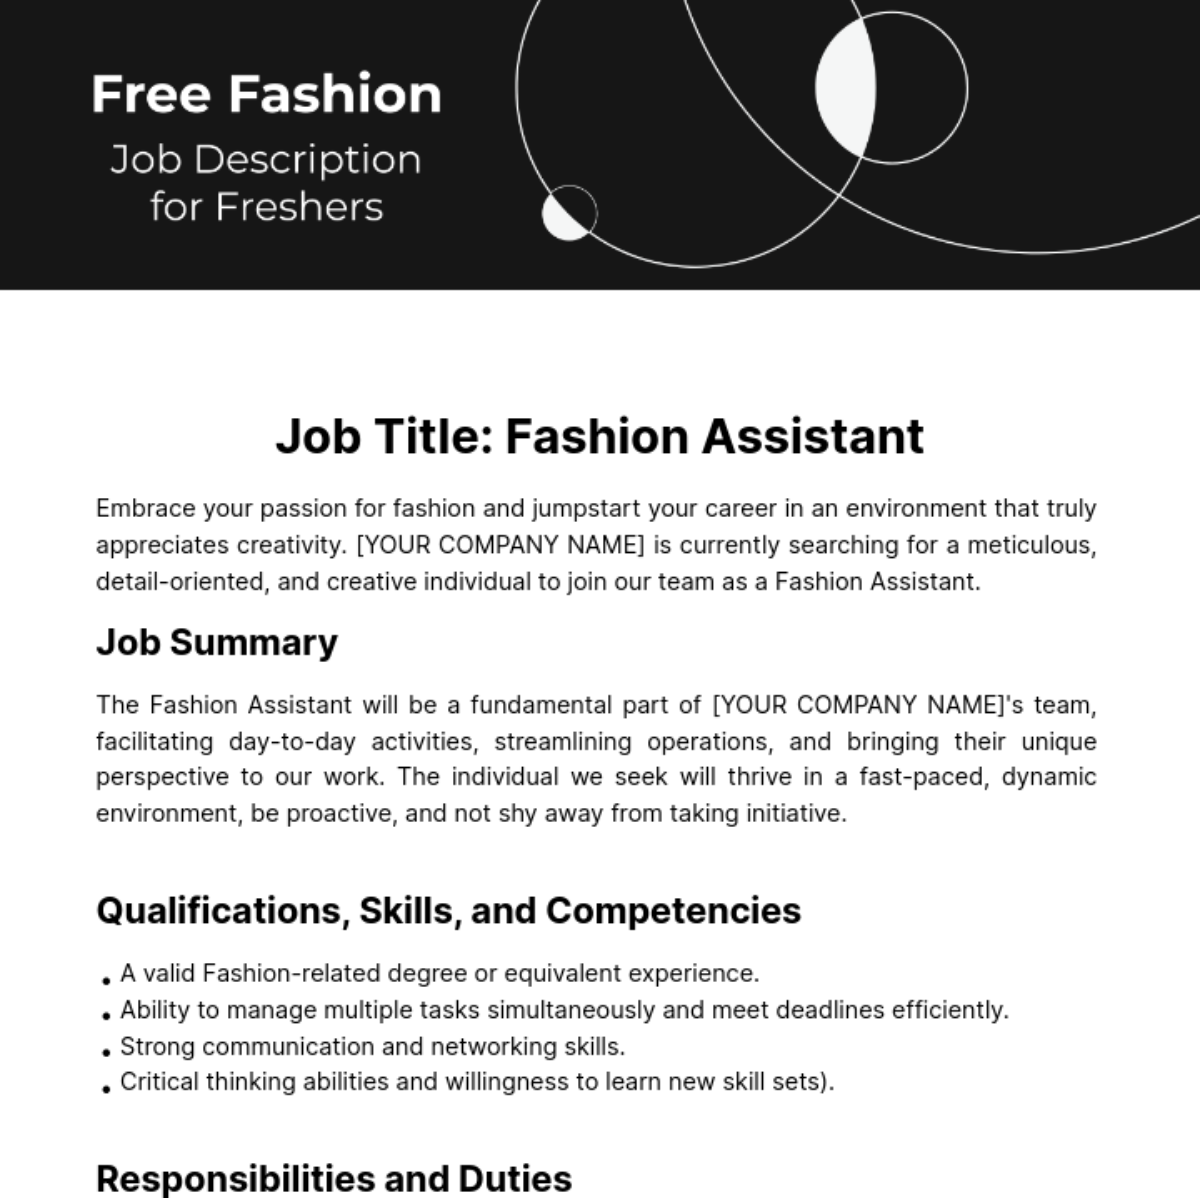 Free Fashion Job Description for Freshers Template